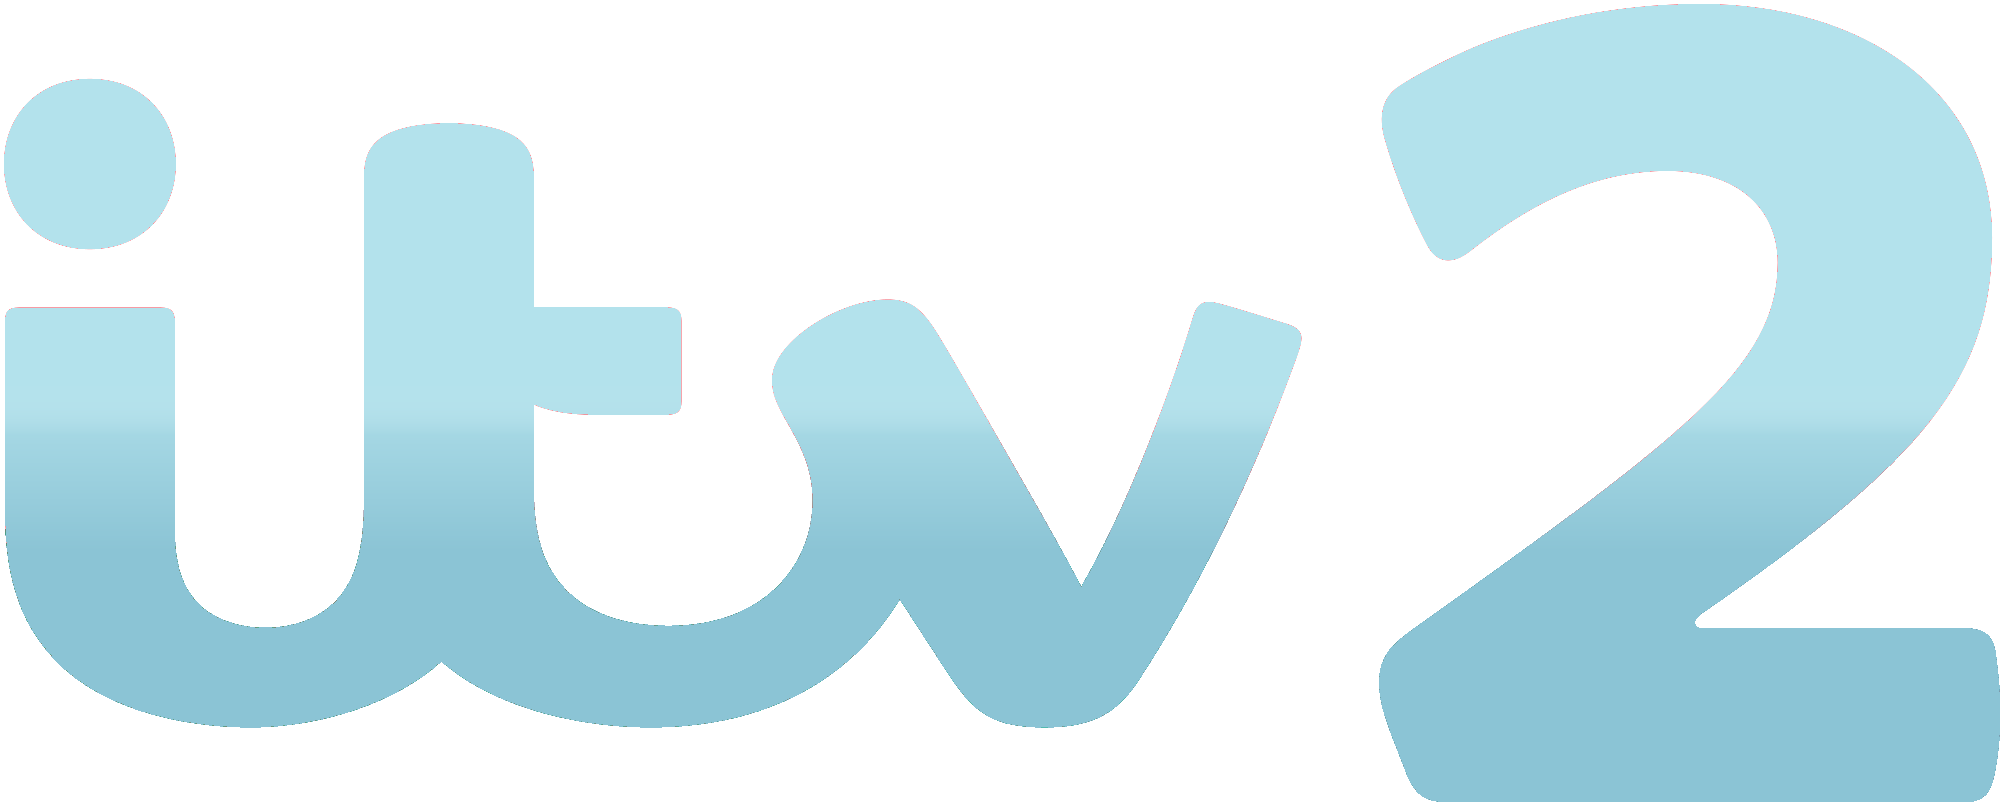 Itv2 Hd Logo Vector PNG - 108370